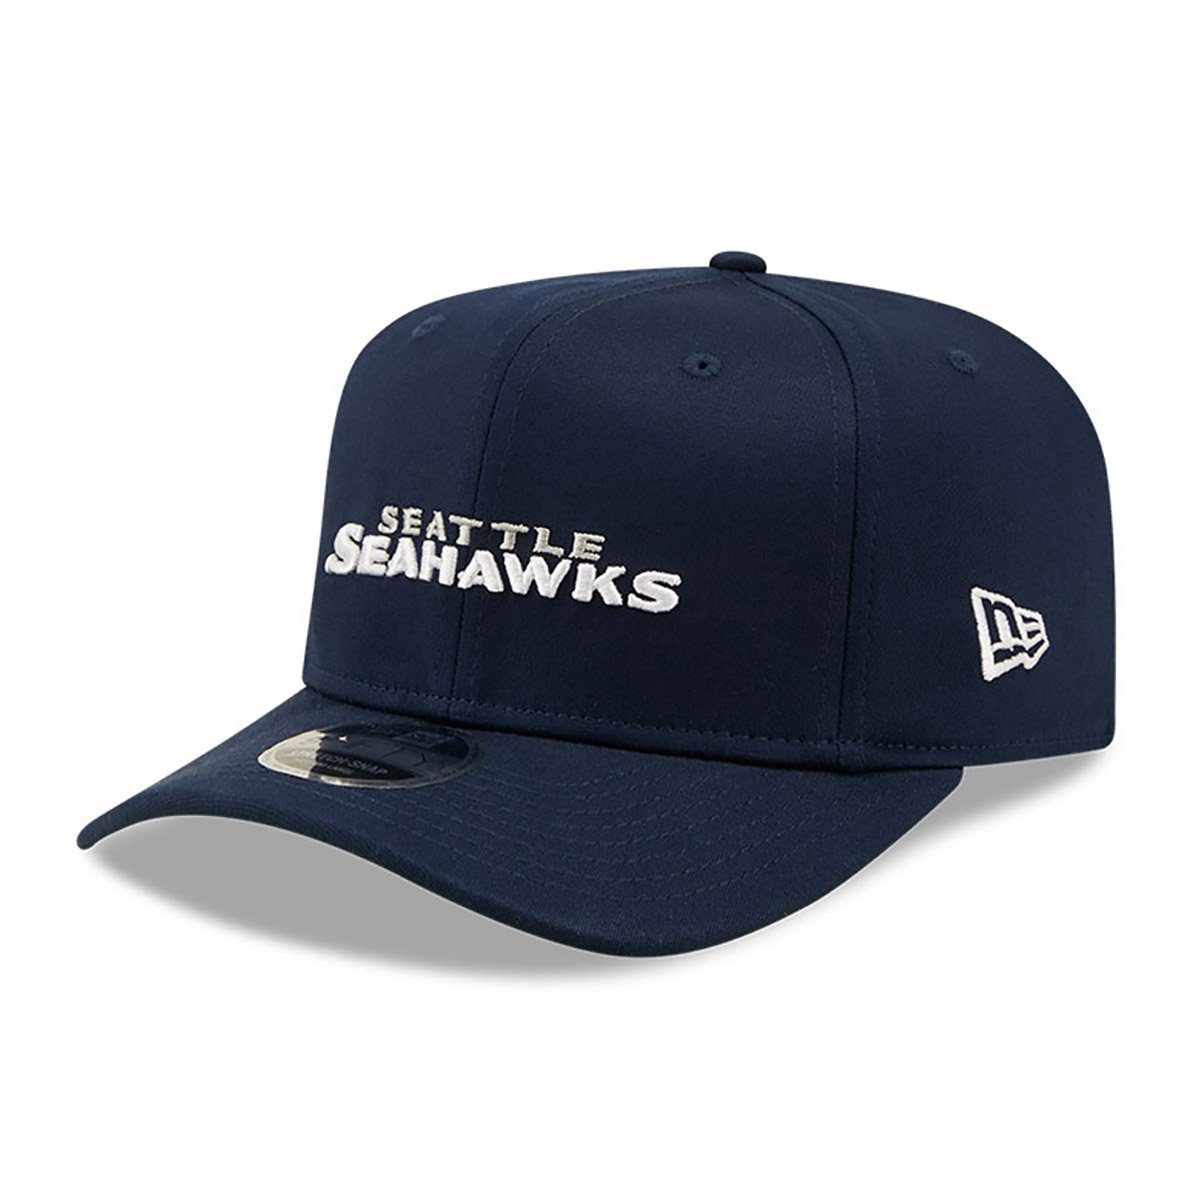 Team Era Seahawks Wordmark Cap New navy Cap Baseball New 9FIFTY Era Seattle NFL22